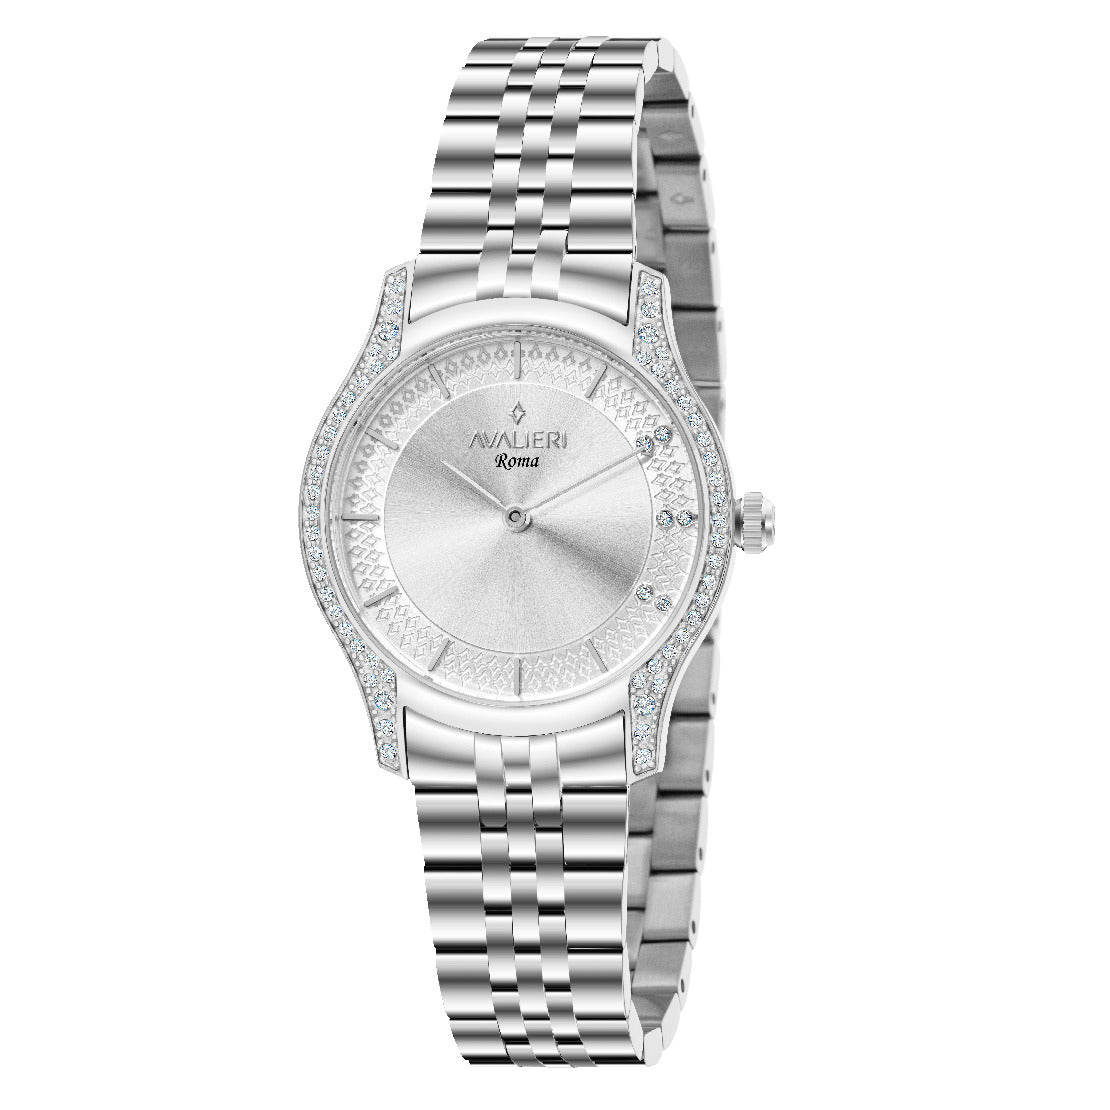 Avalieri Women's Quartz Watch Silver Dial - AV-2568B